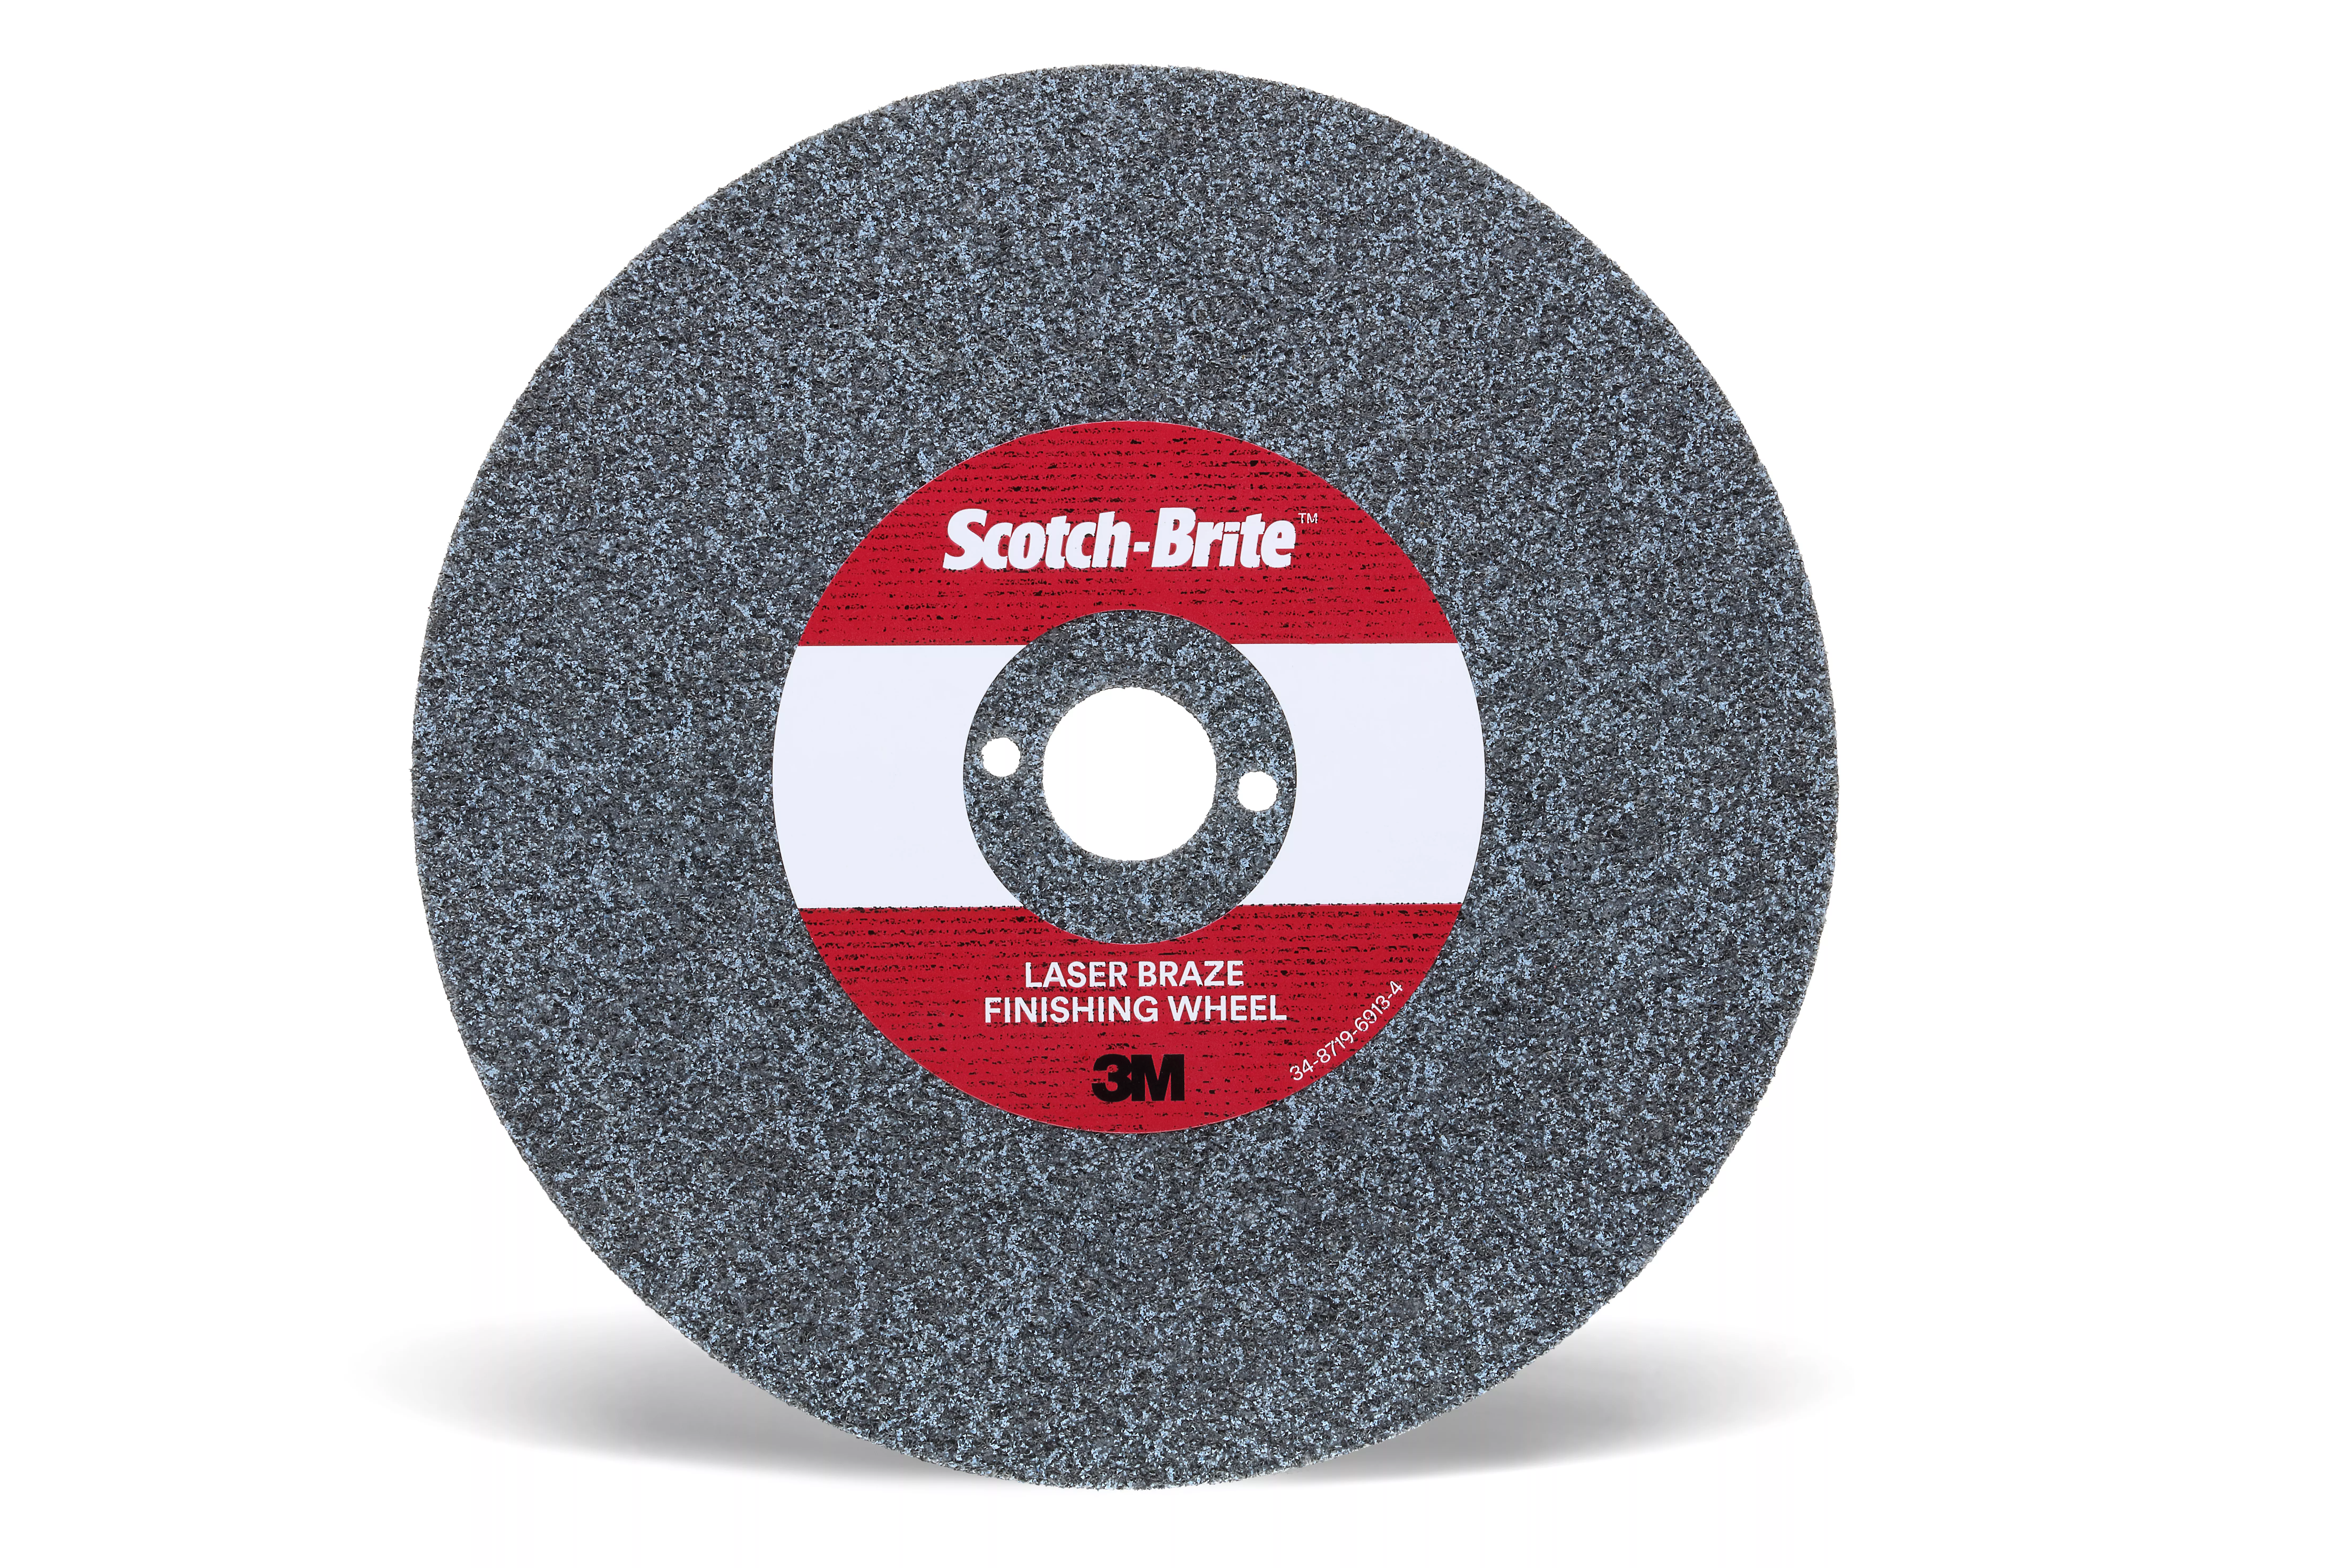 SKU 7100115840 | Scotch-Brite™ Laser Braze Finishing Wheel